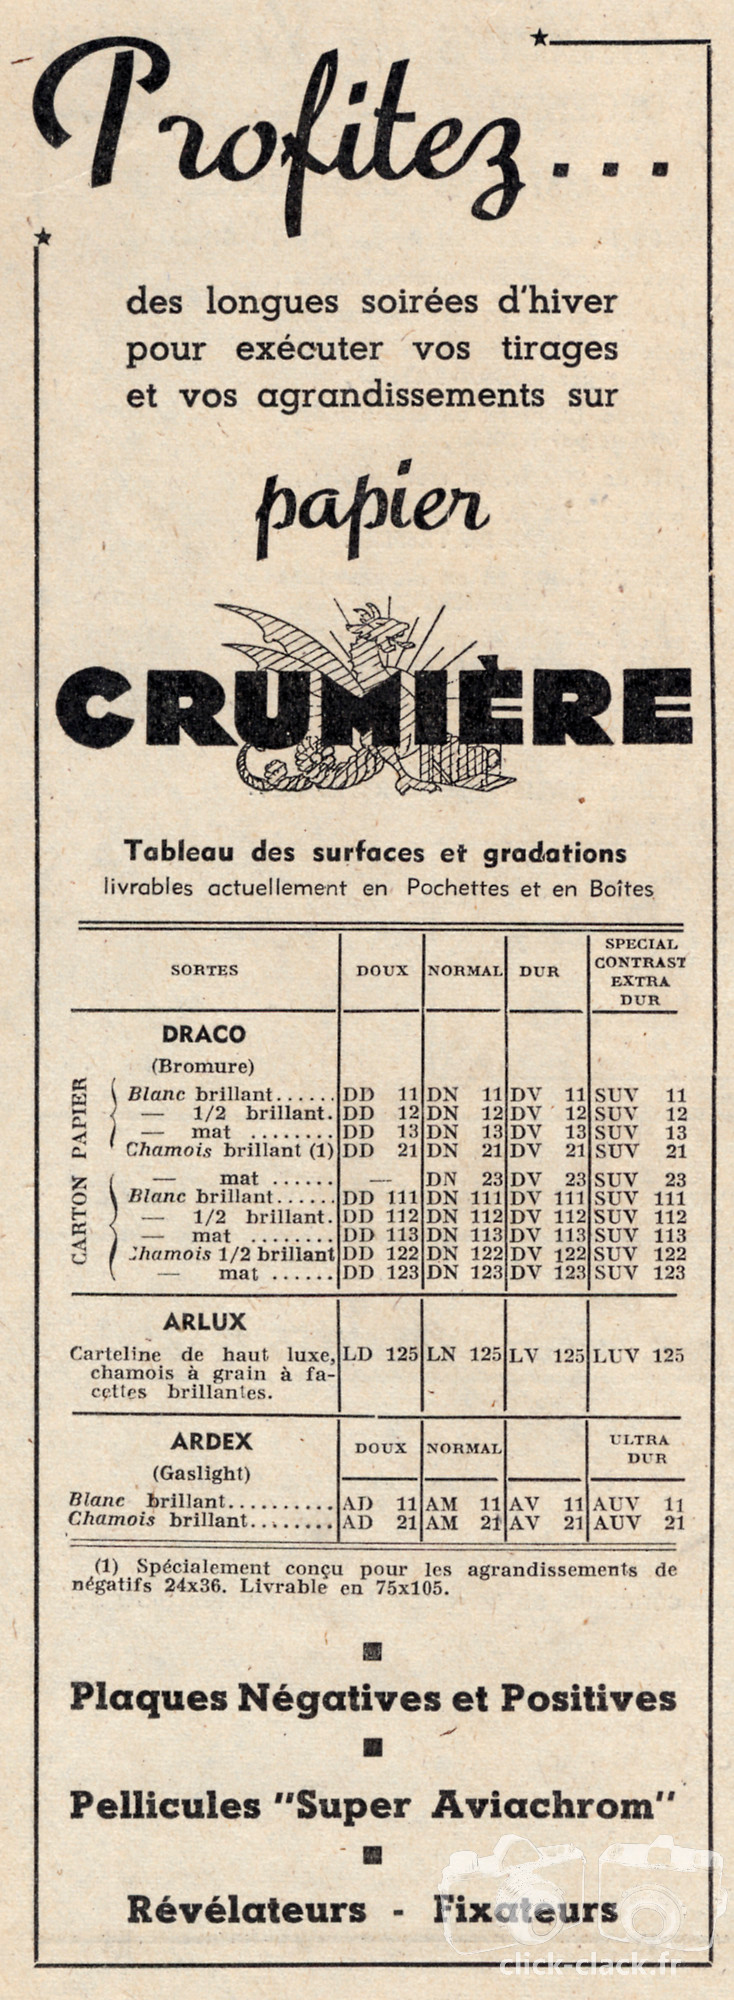 Crumière - Pellicule Super-Aviachrom, Papier Draco, Arlux, Ardex - 1948